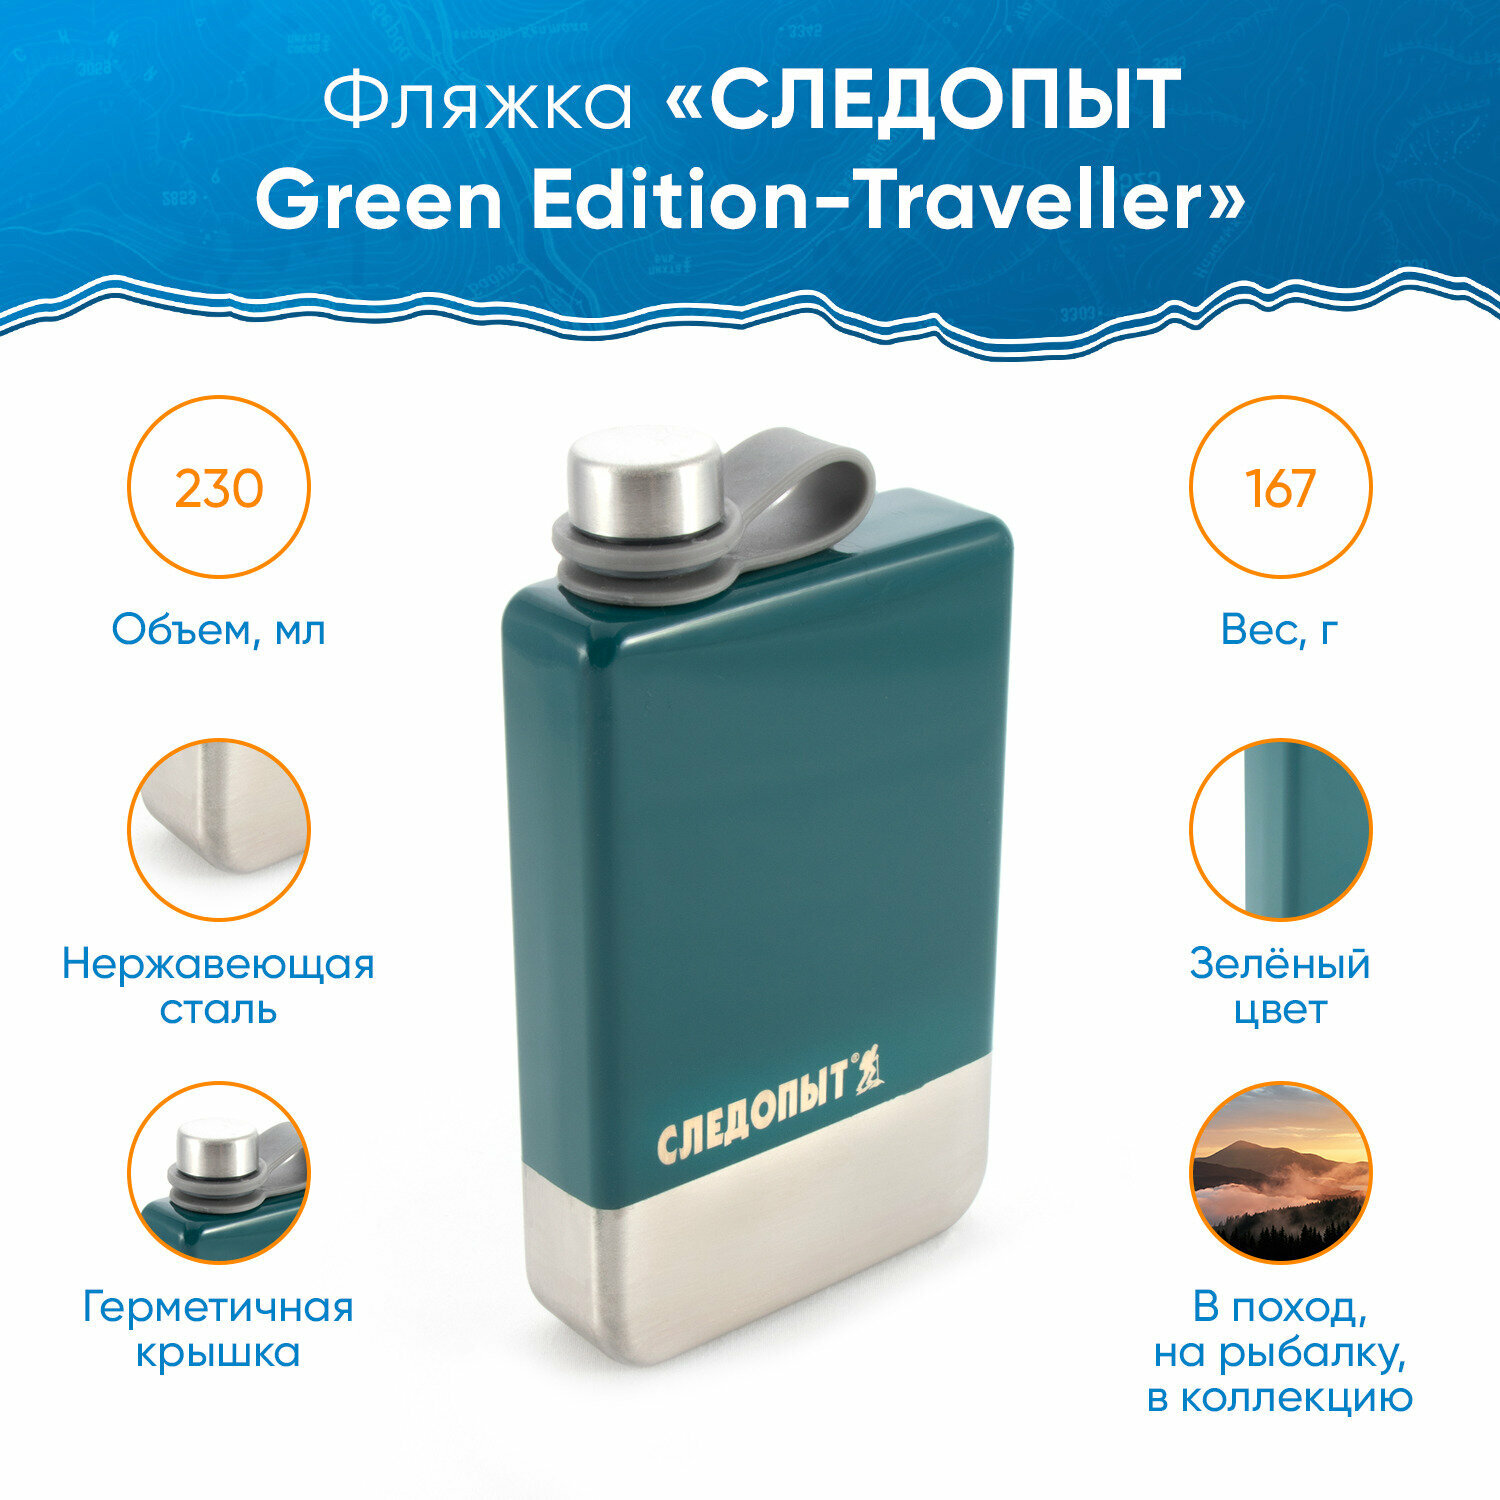 Фляжка "следопыт Green Edition - Traveller" зеленая, 230 мл, сталь 304